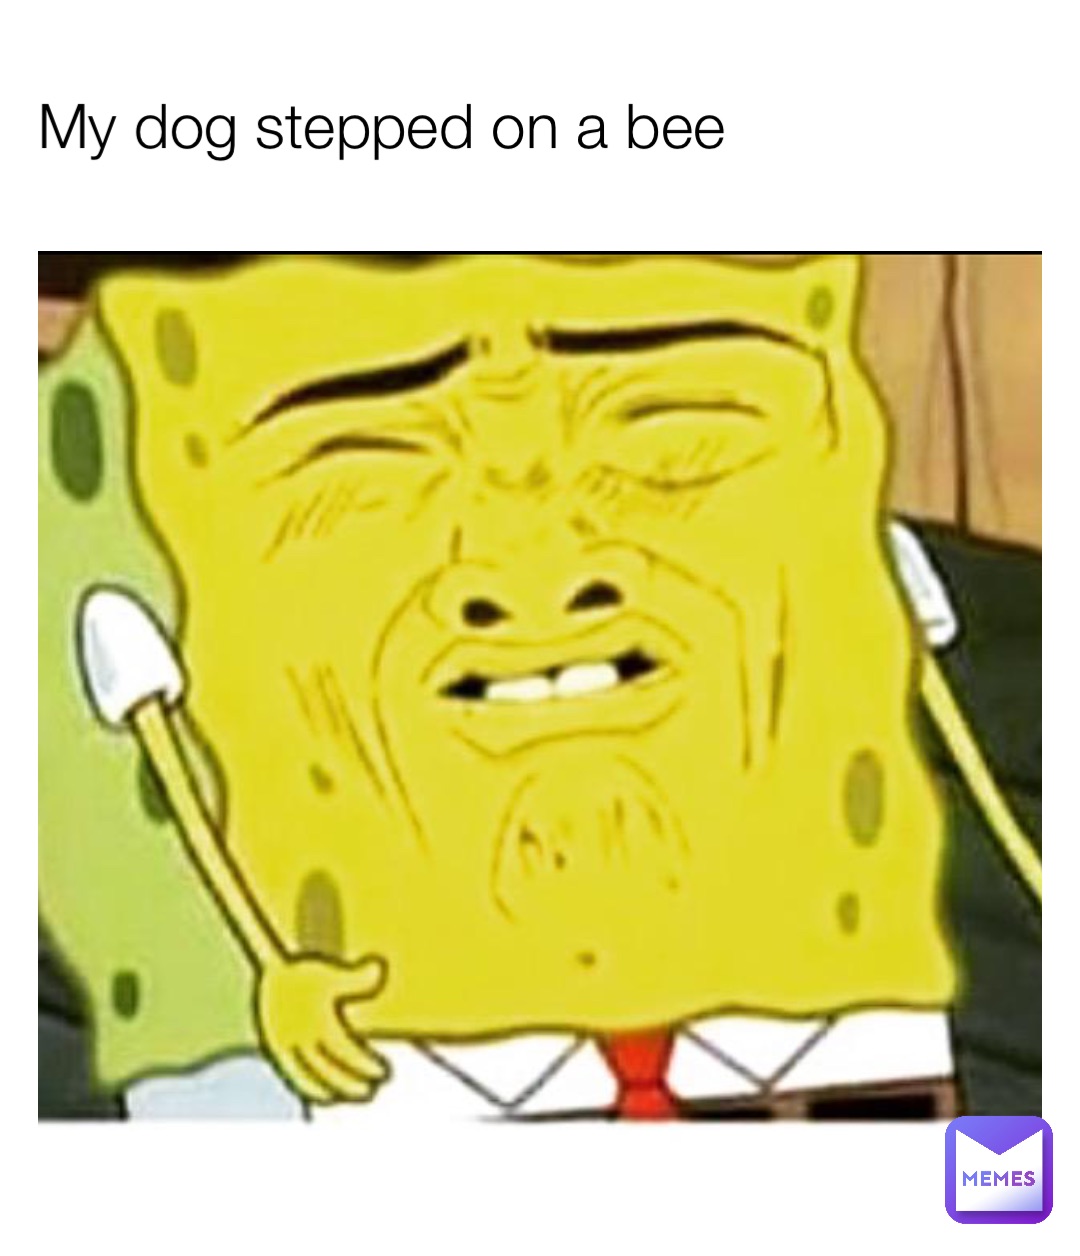 Spongebob Memes on X: My Dog stepped on a Bee